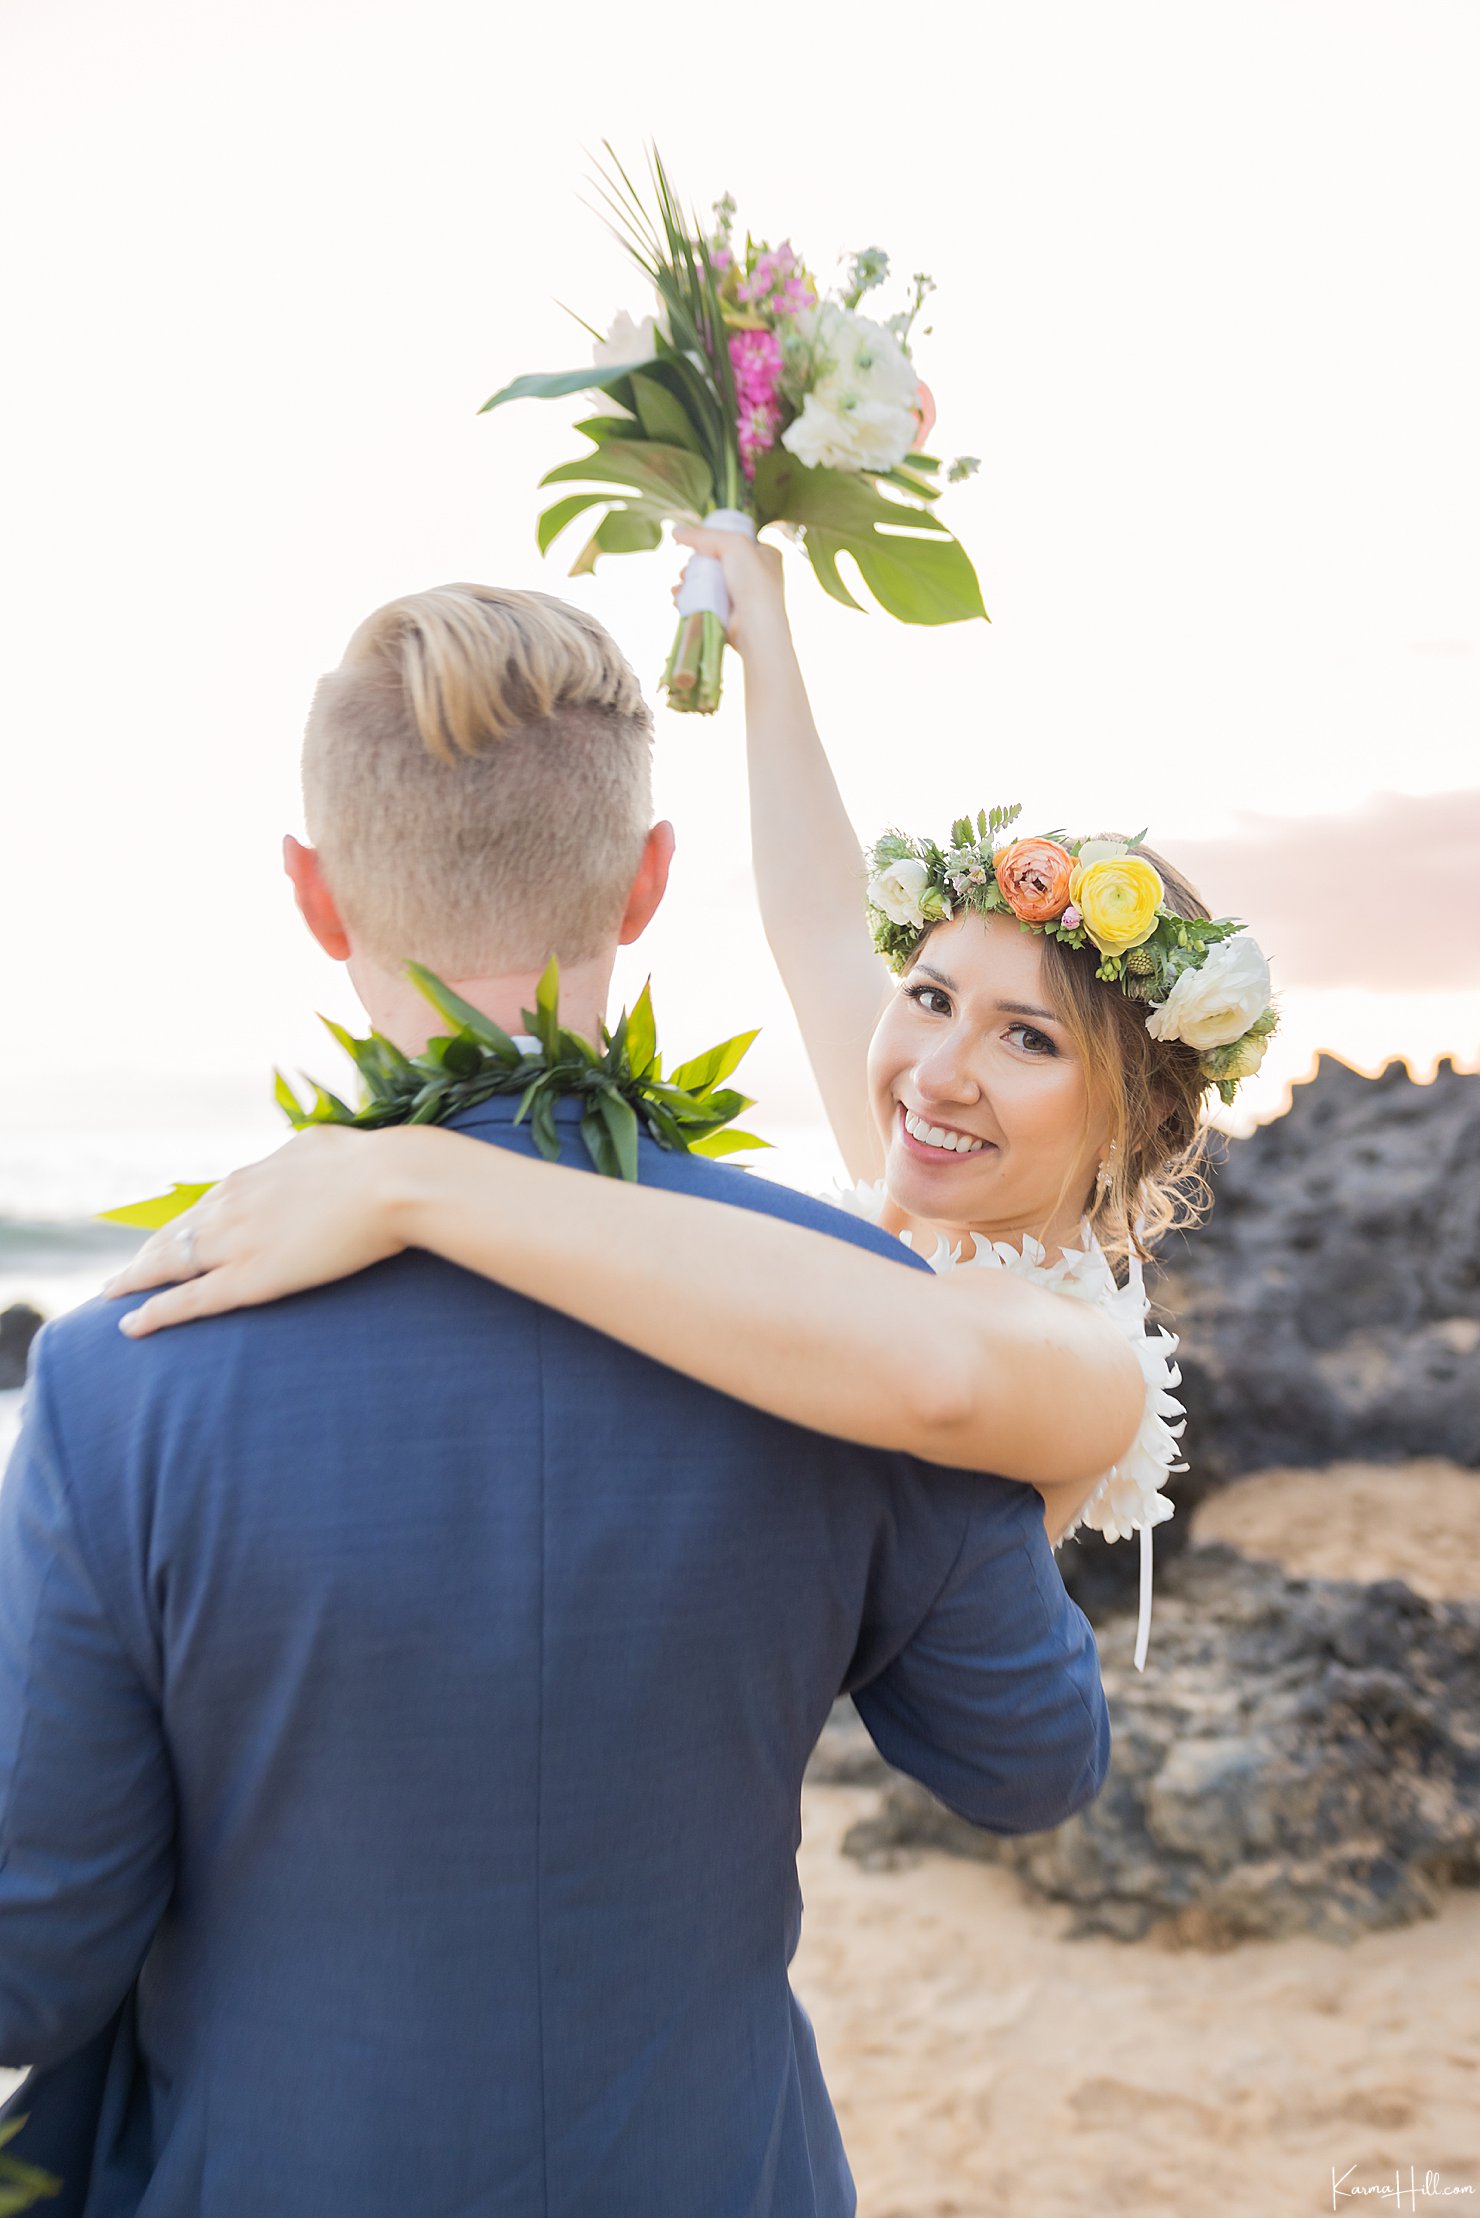 Hawaii marriage license